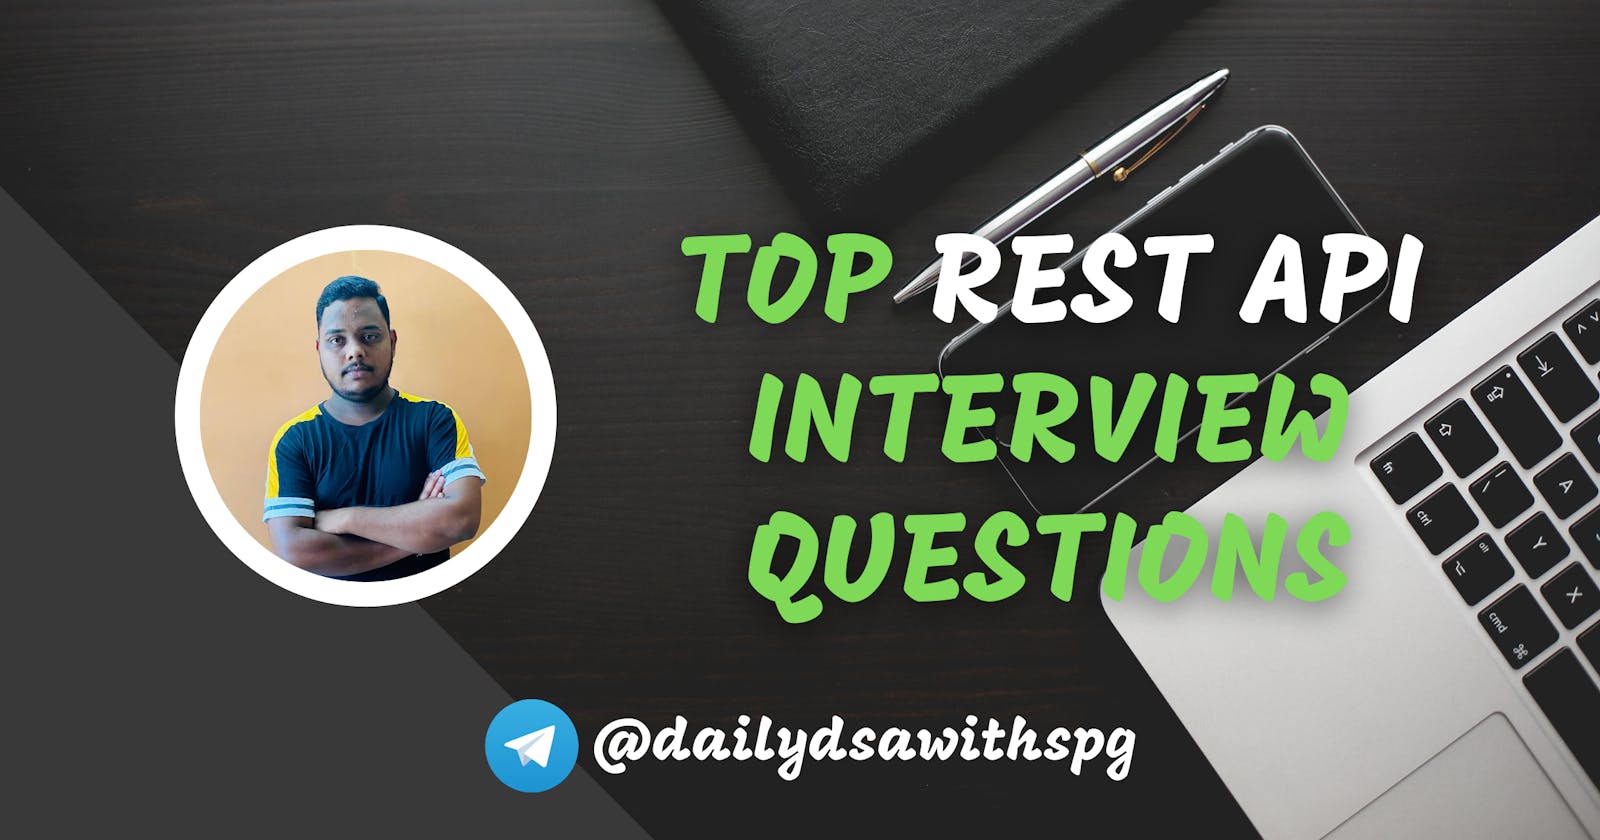 Top REST API interview questions